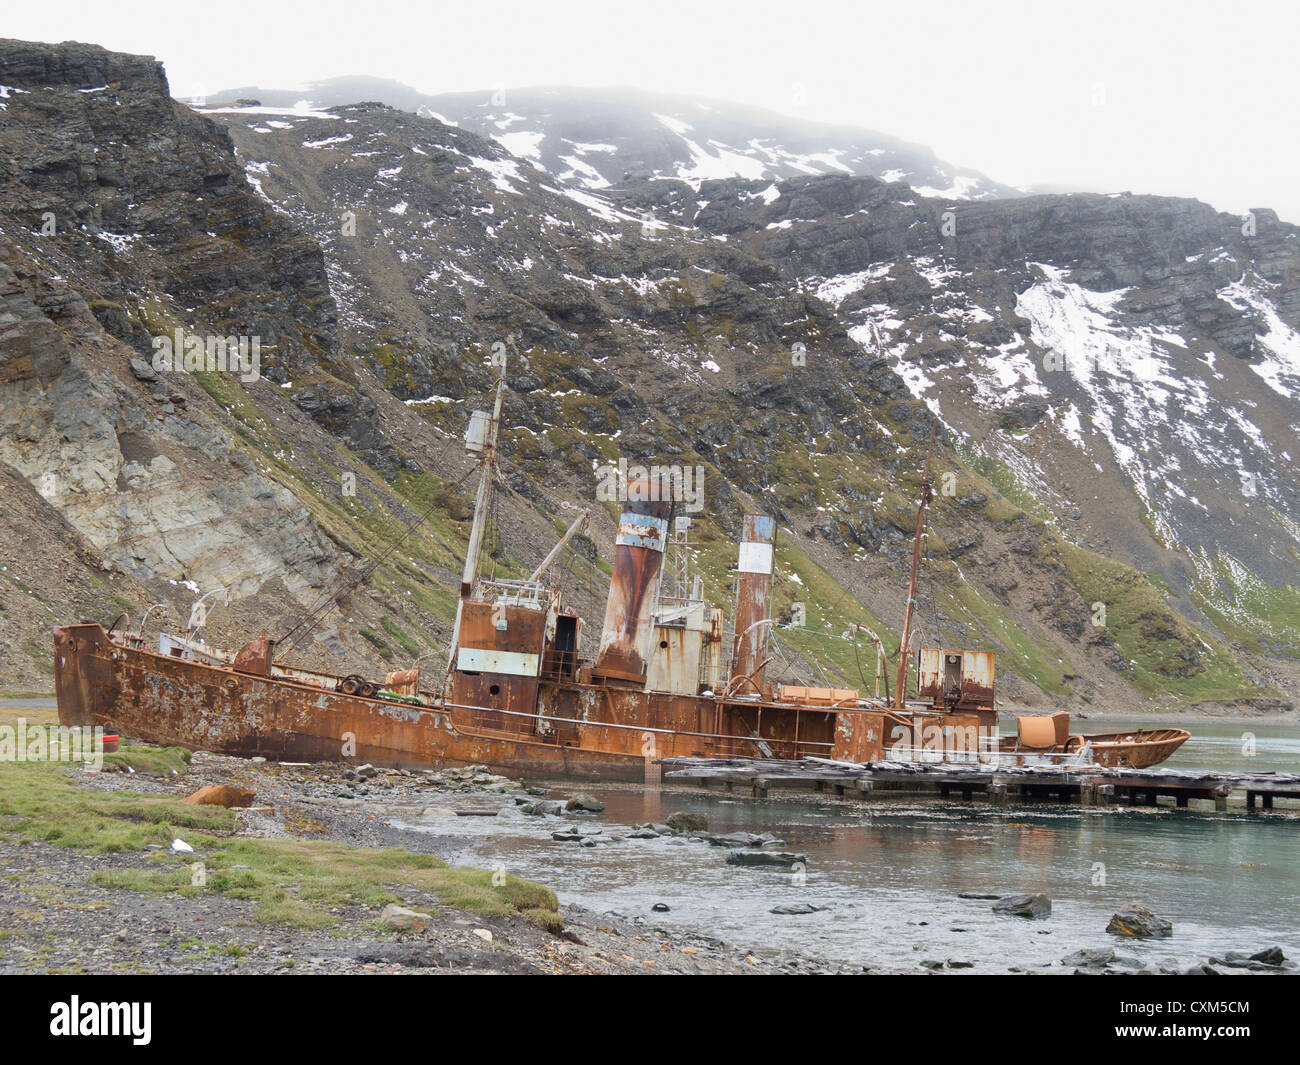 Verlassener Walfangschiff in Grytviken, Südgeorgien Insel. Stockfoto